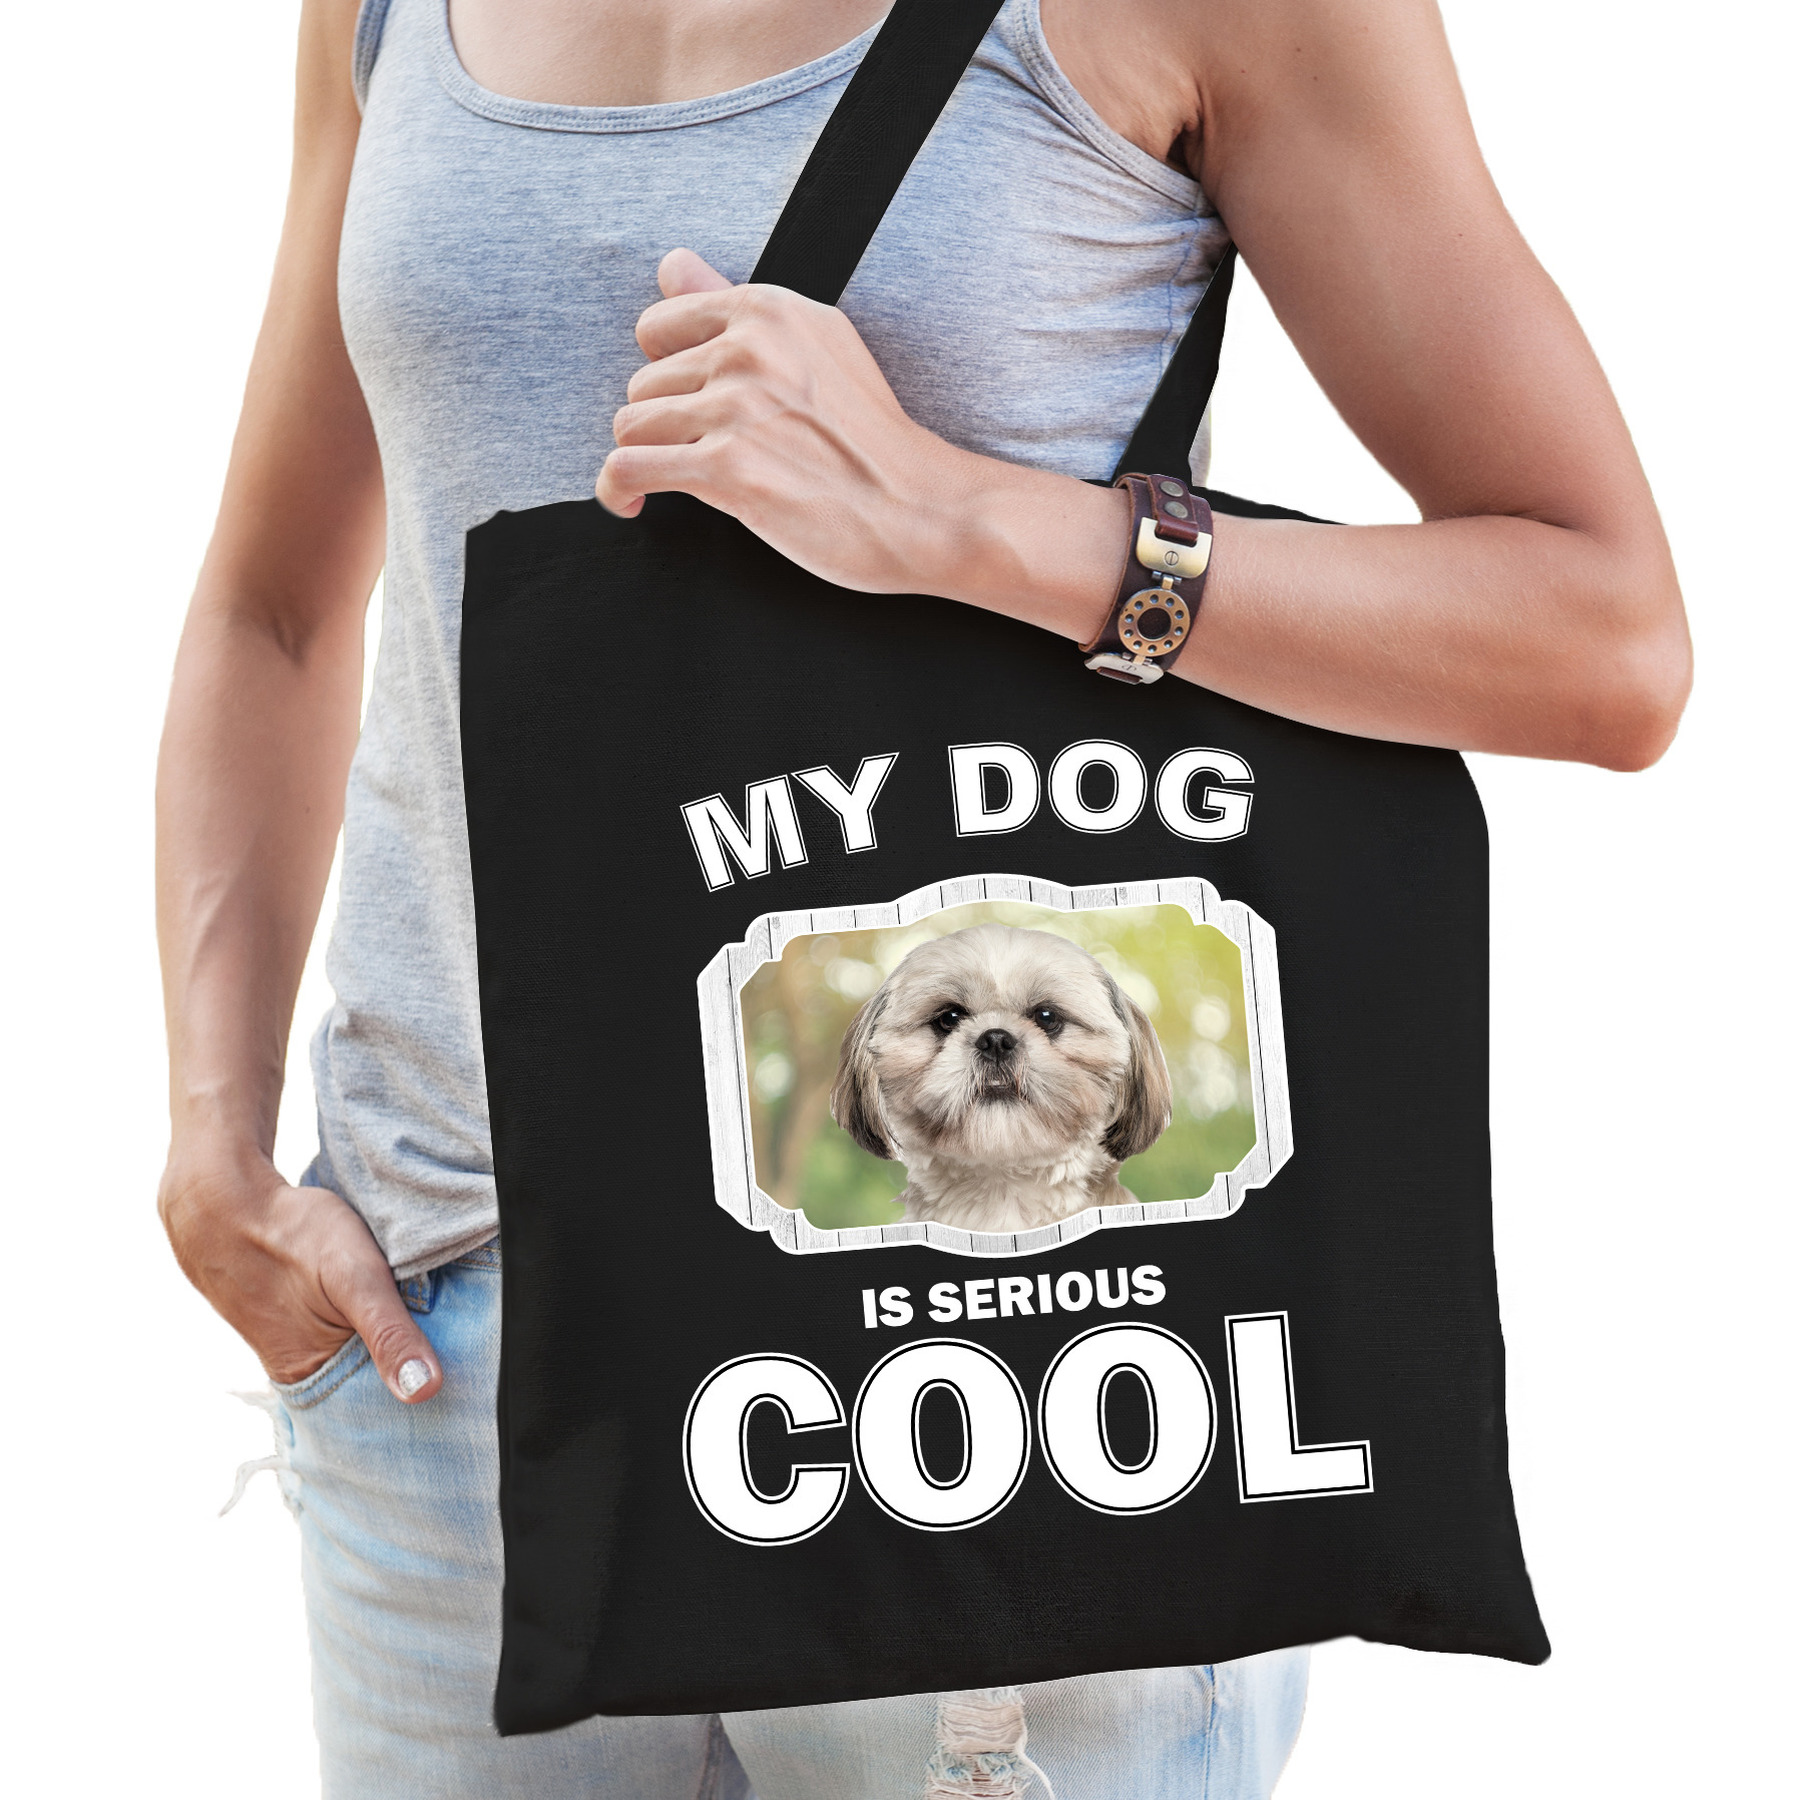 Katoenen tasje my dog is serious cool zwart - Shih tzu honden cadeau tas